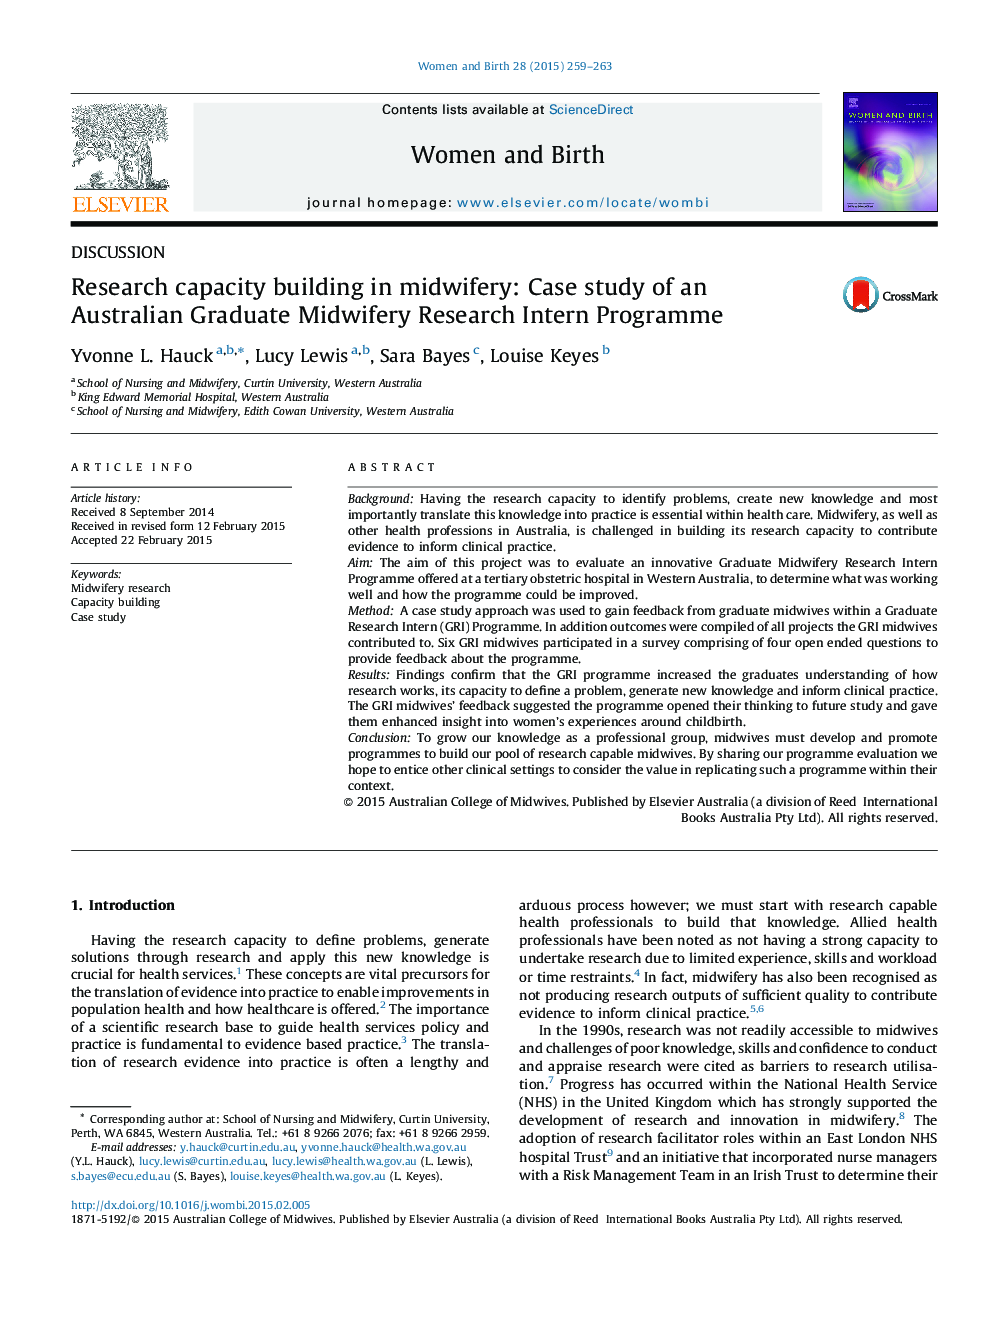 Research capacity building in midwifery: Case study of an Australian Graduate Midwifery Research Intern Programme